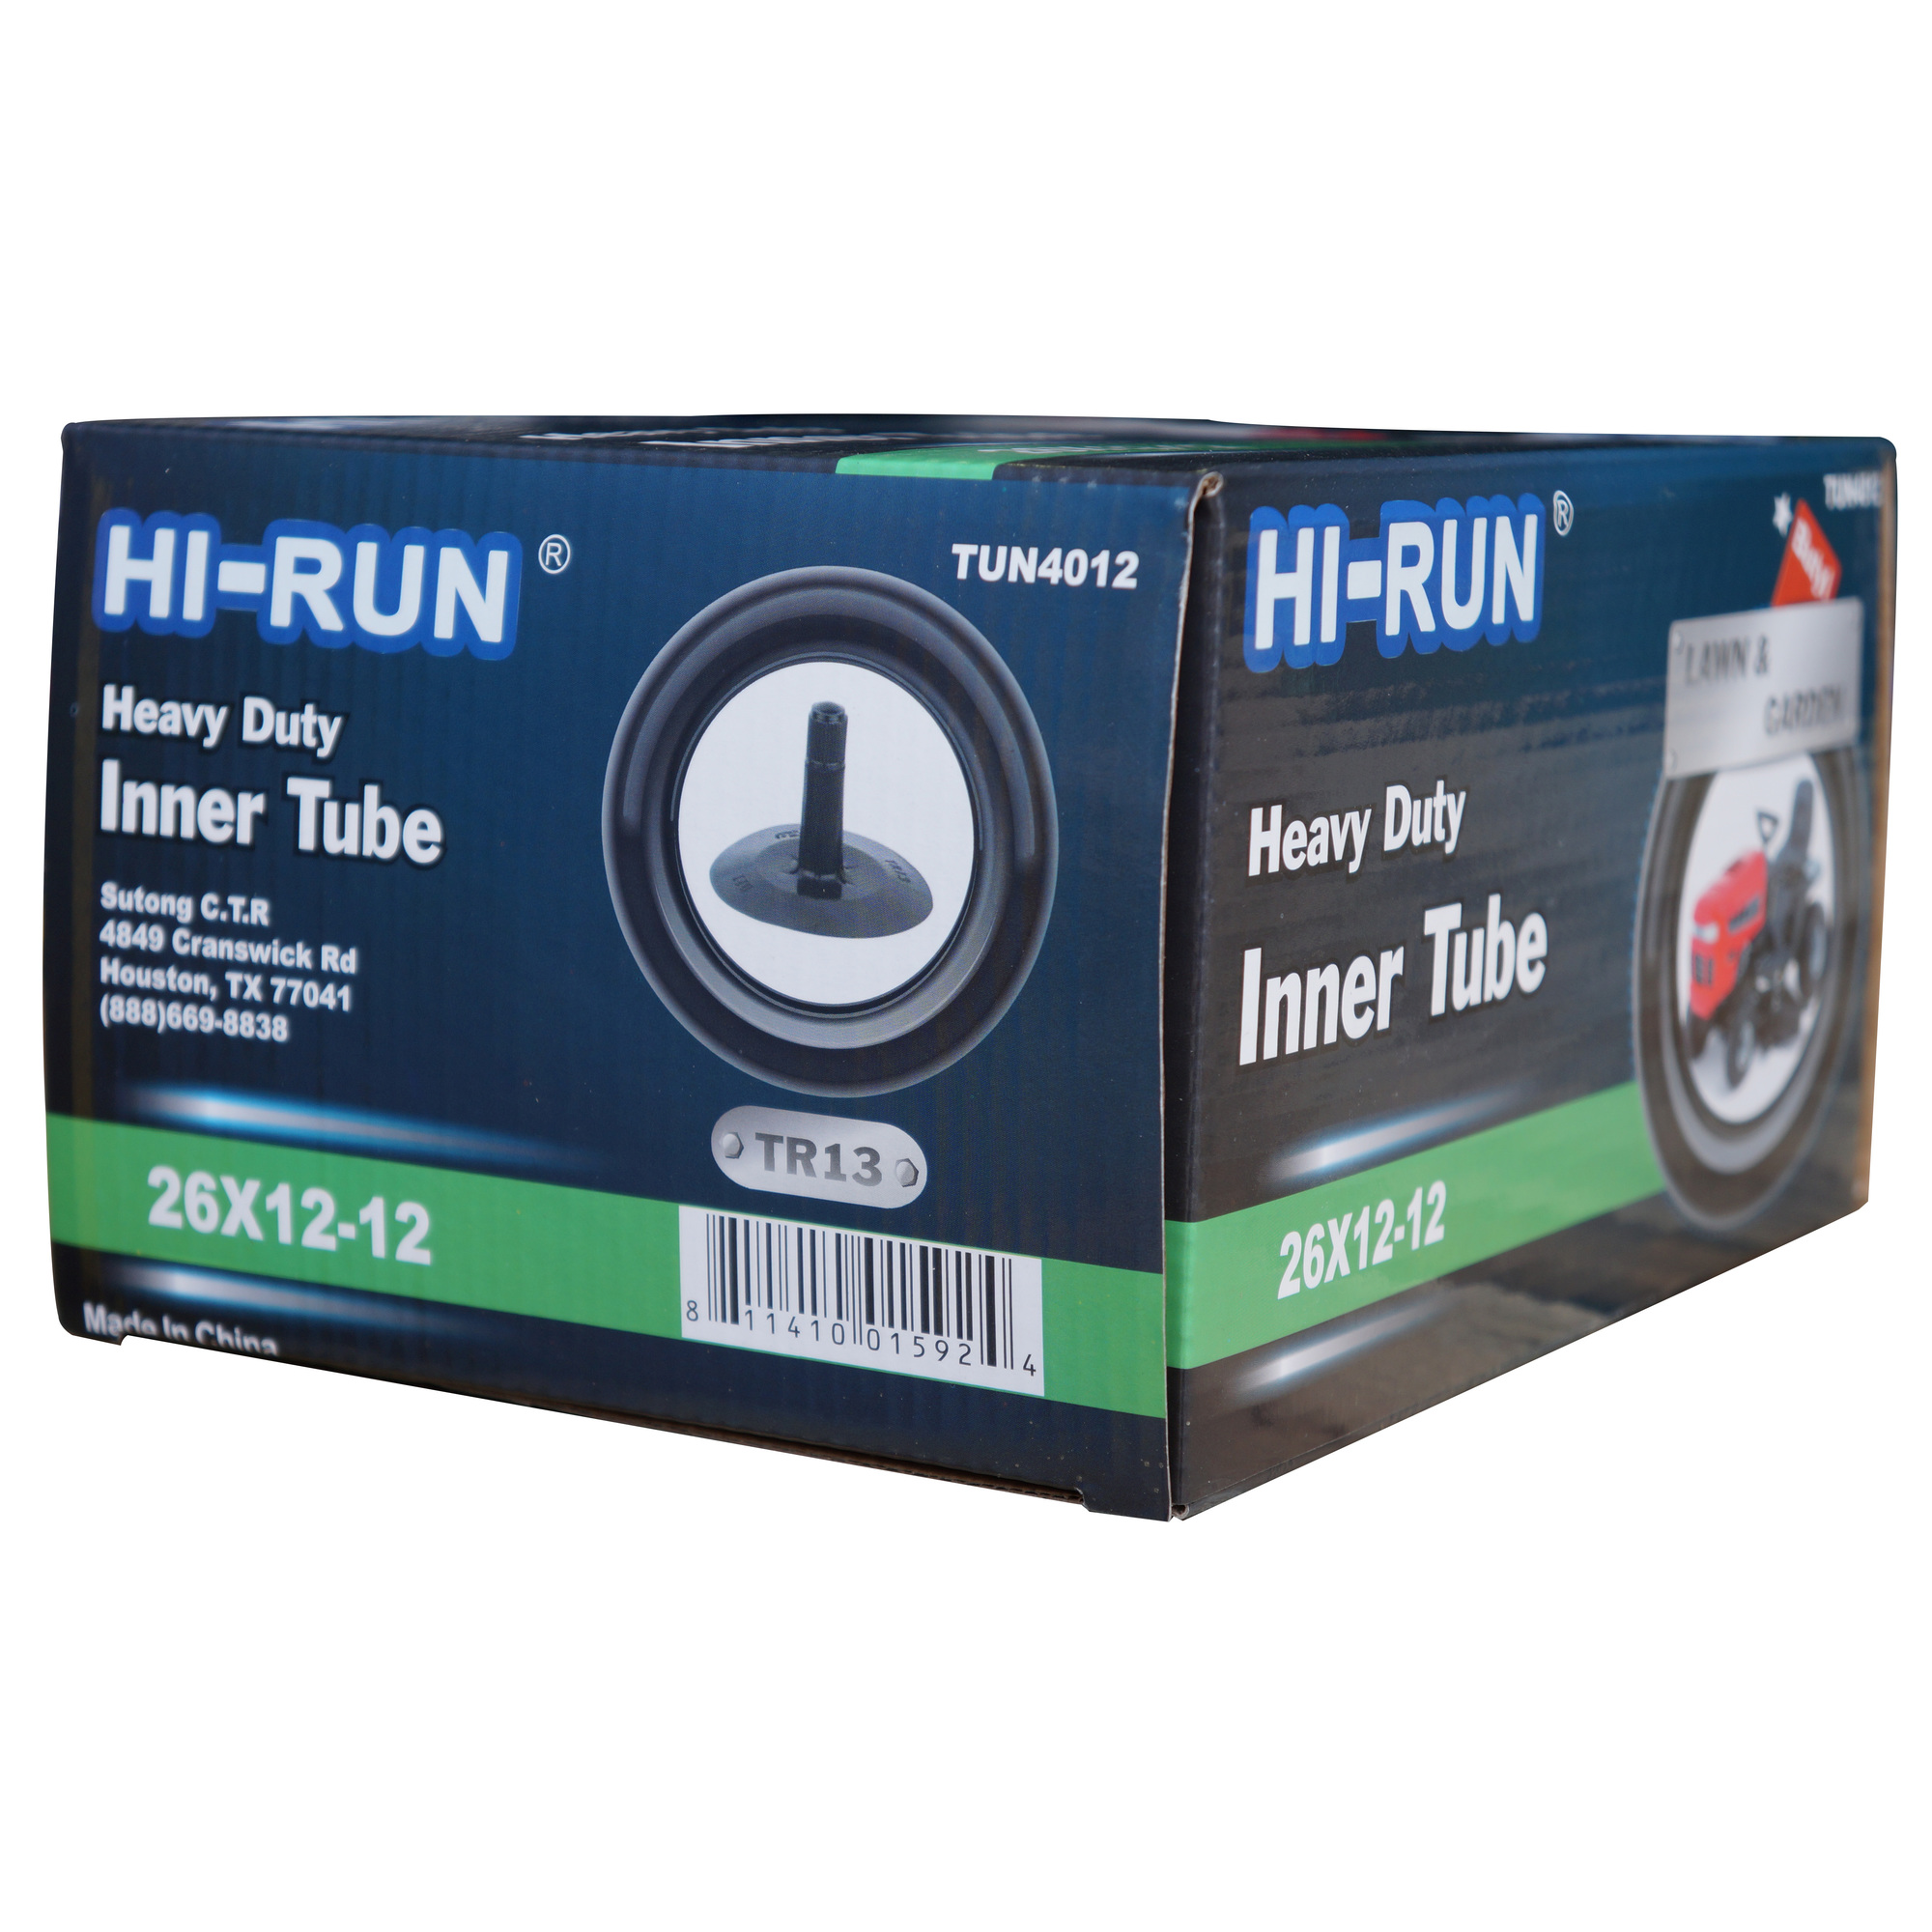 HI-RUN, Tube 26X12-12 TR13 Lawn Garden, Fits Rim Size 12 in, Included (qty.) 1 Model TUN4012